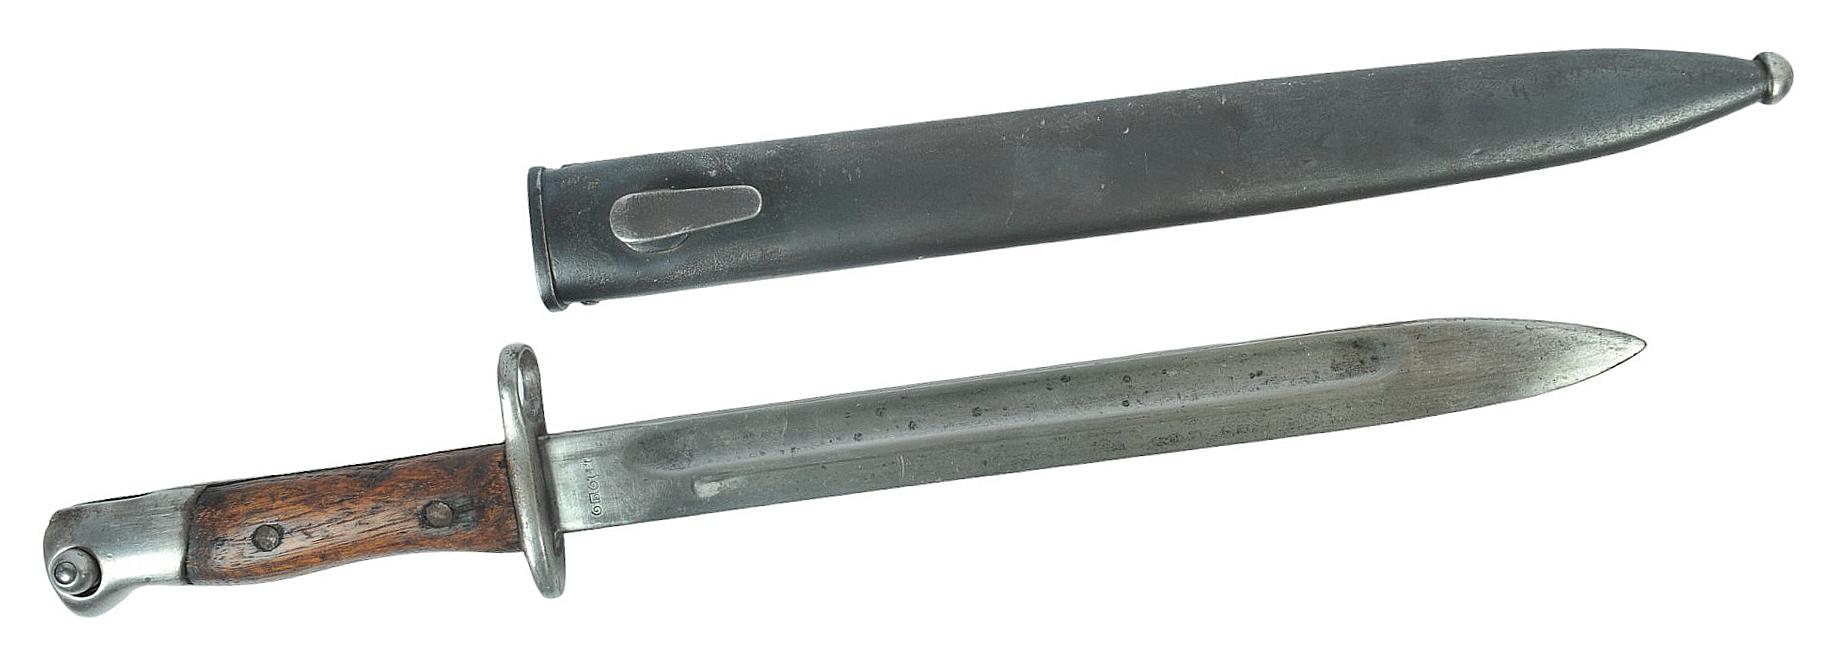 Rare Siamese Military WWII era Mauser Rifle Bayonet (A)